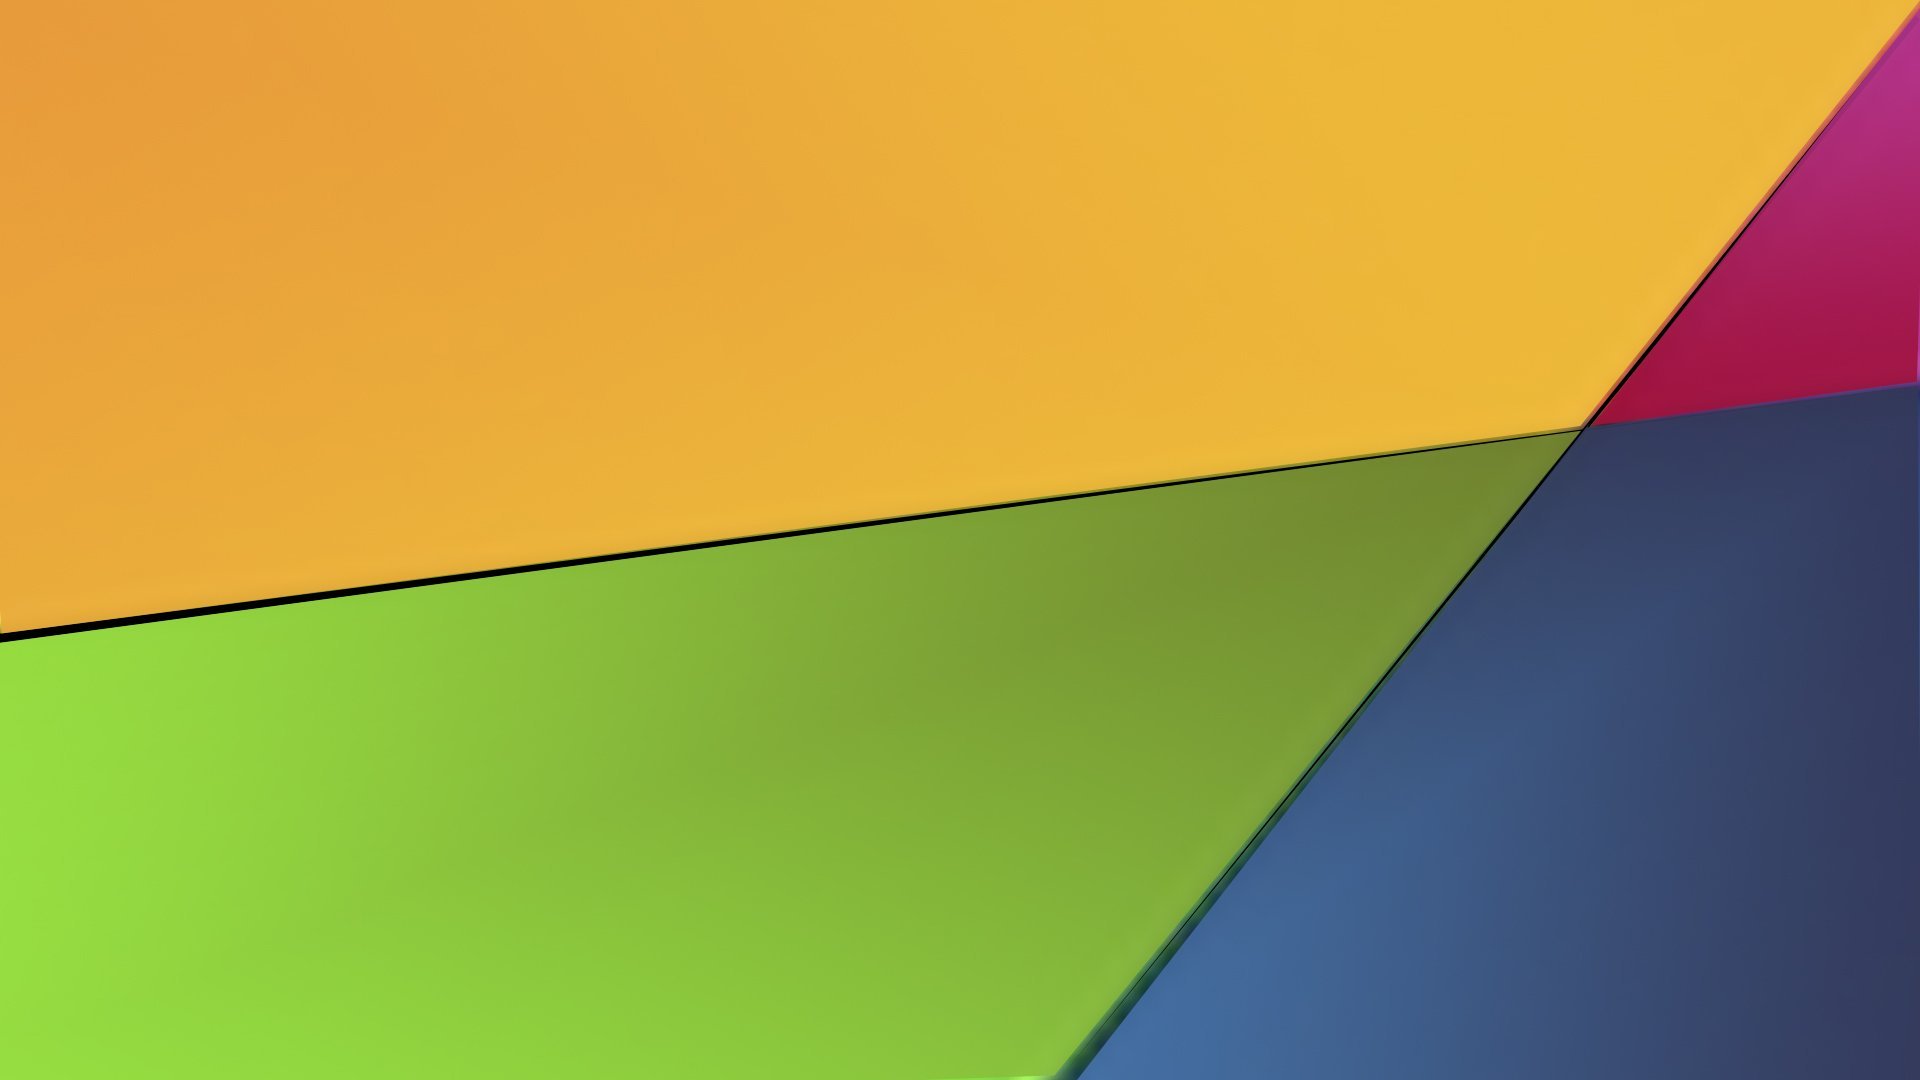 Download Free Chromebook Backgrounds Pixelstalk Net